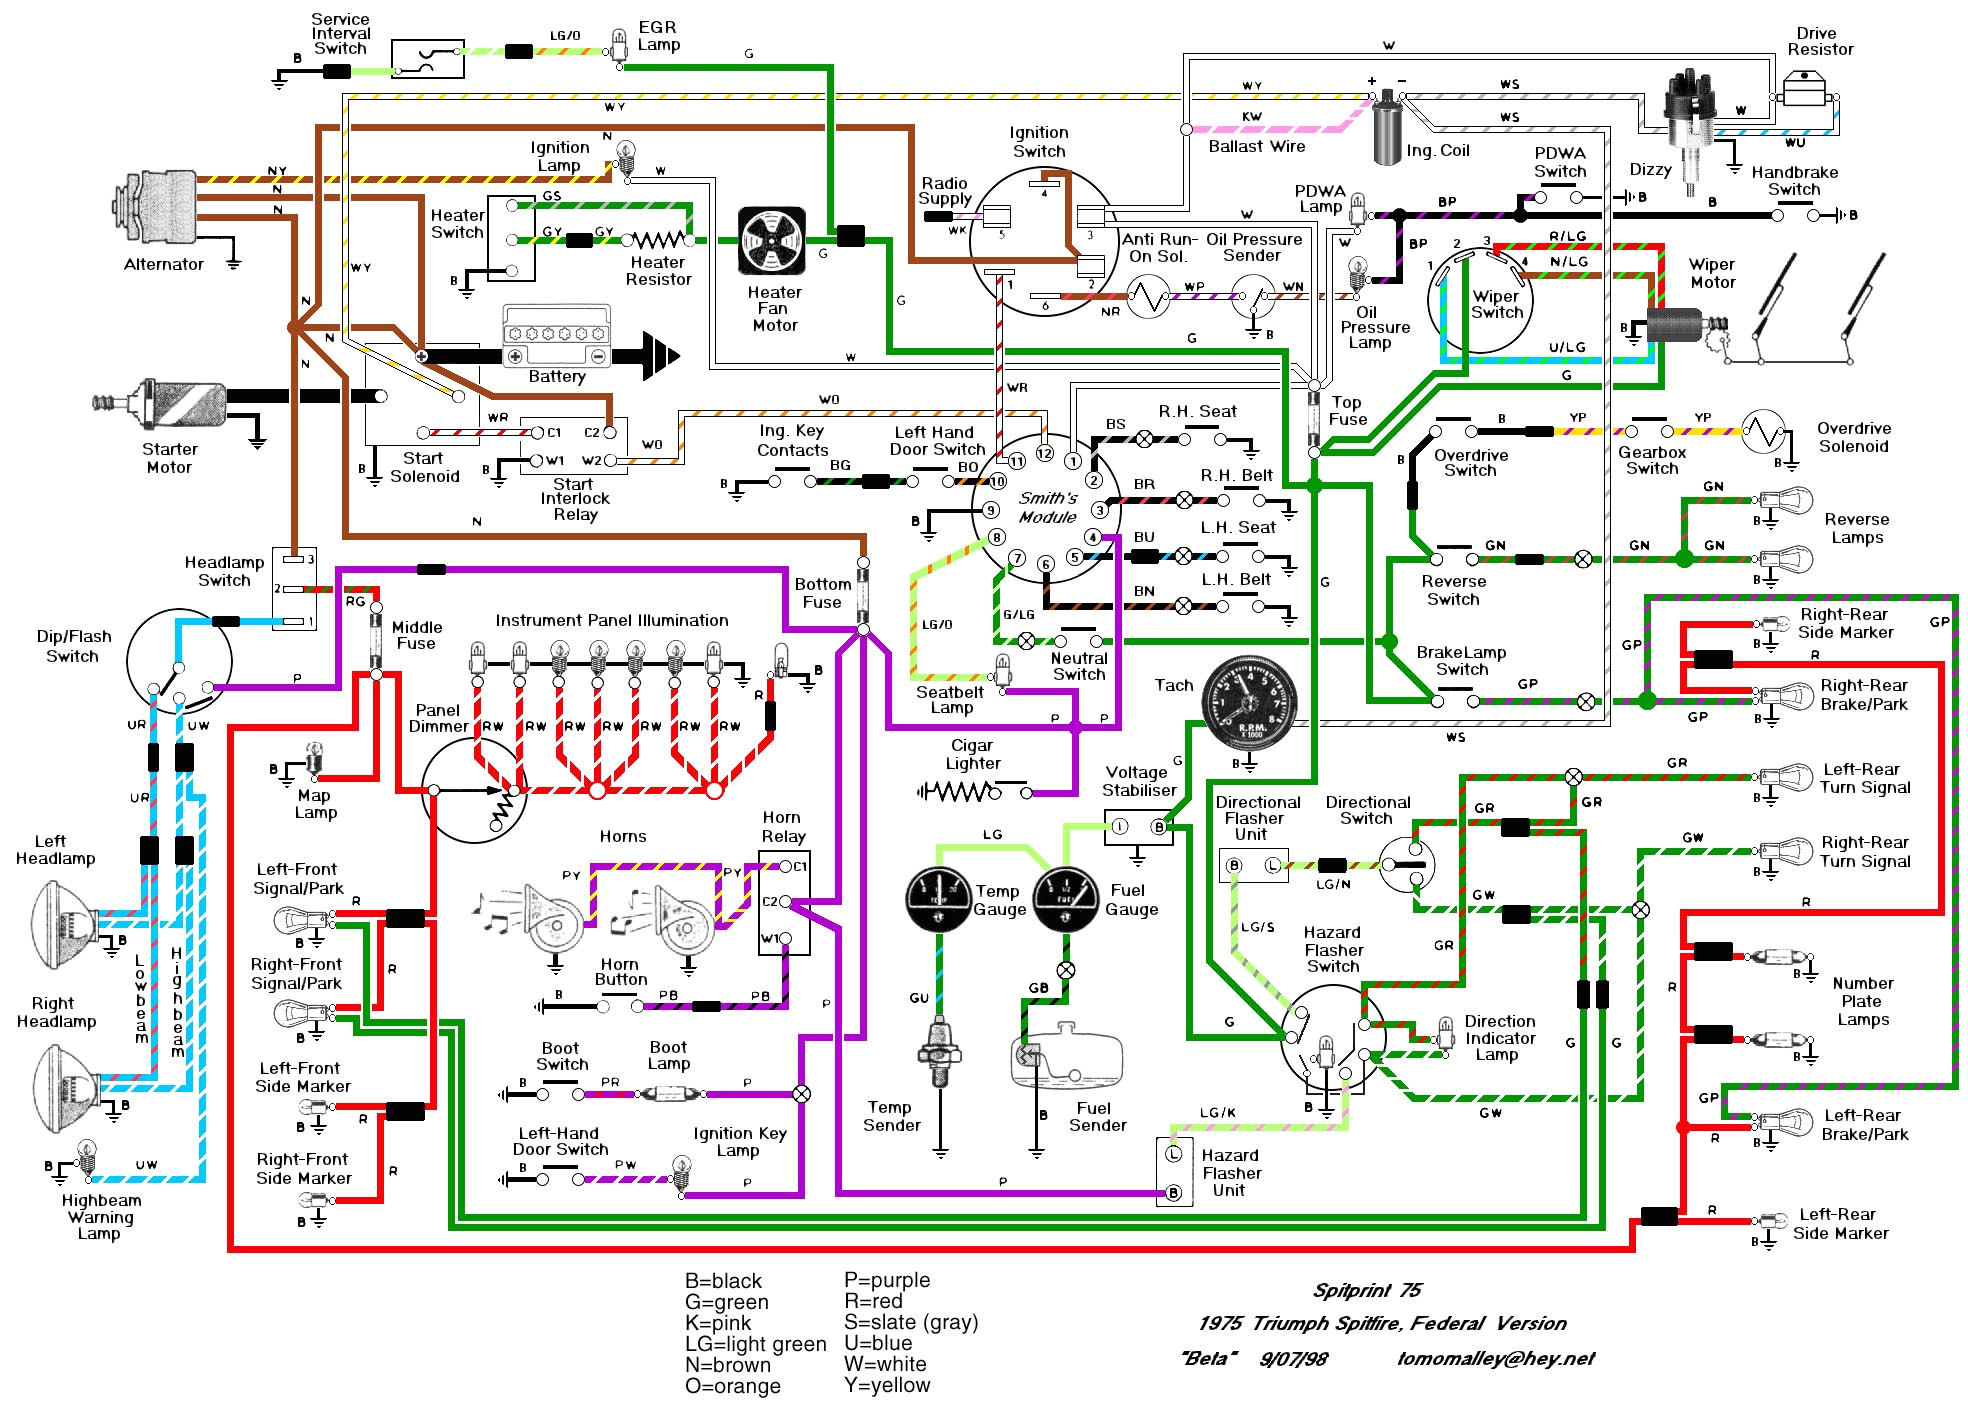 1968 mgb wiring diagram wiring diagram user 1968 mgb wiring diagram wiring diagram 1968 mgb wiring